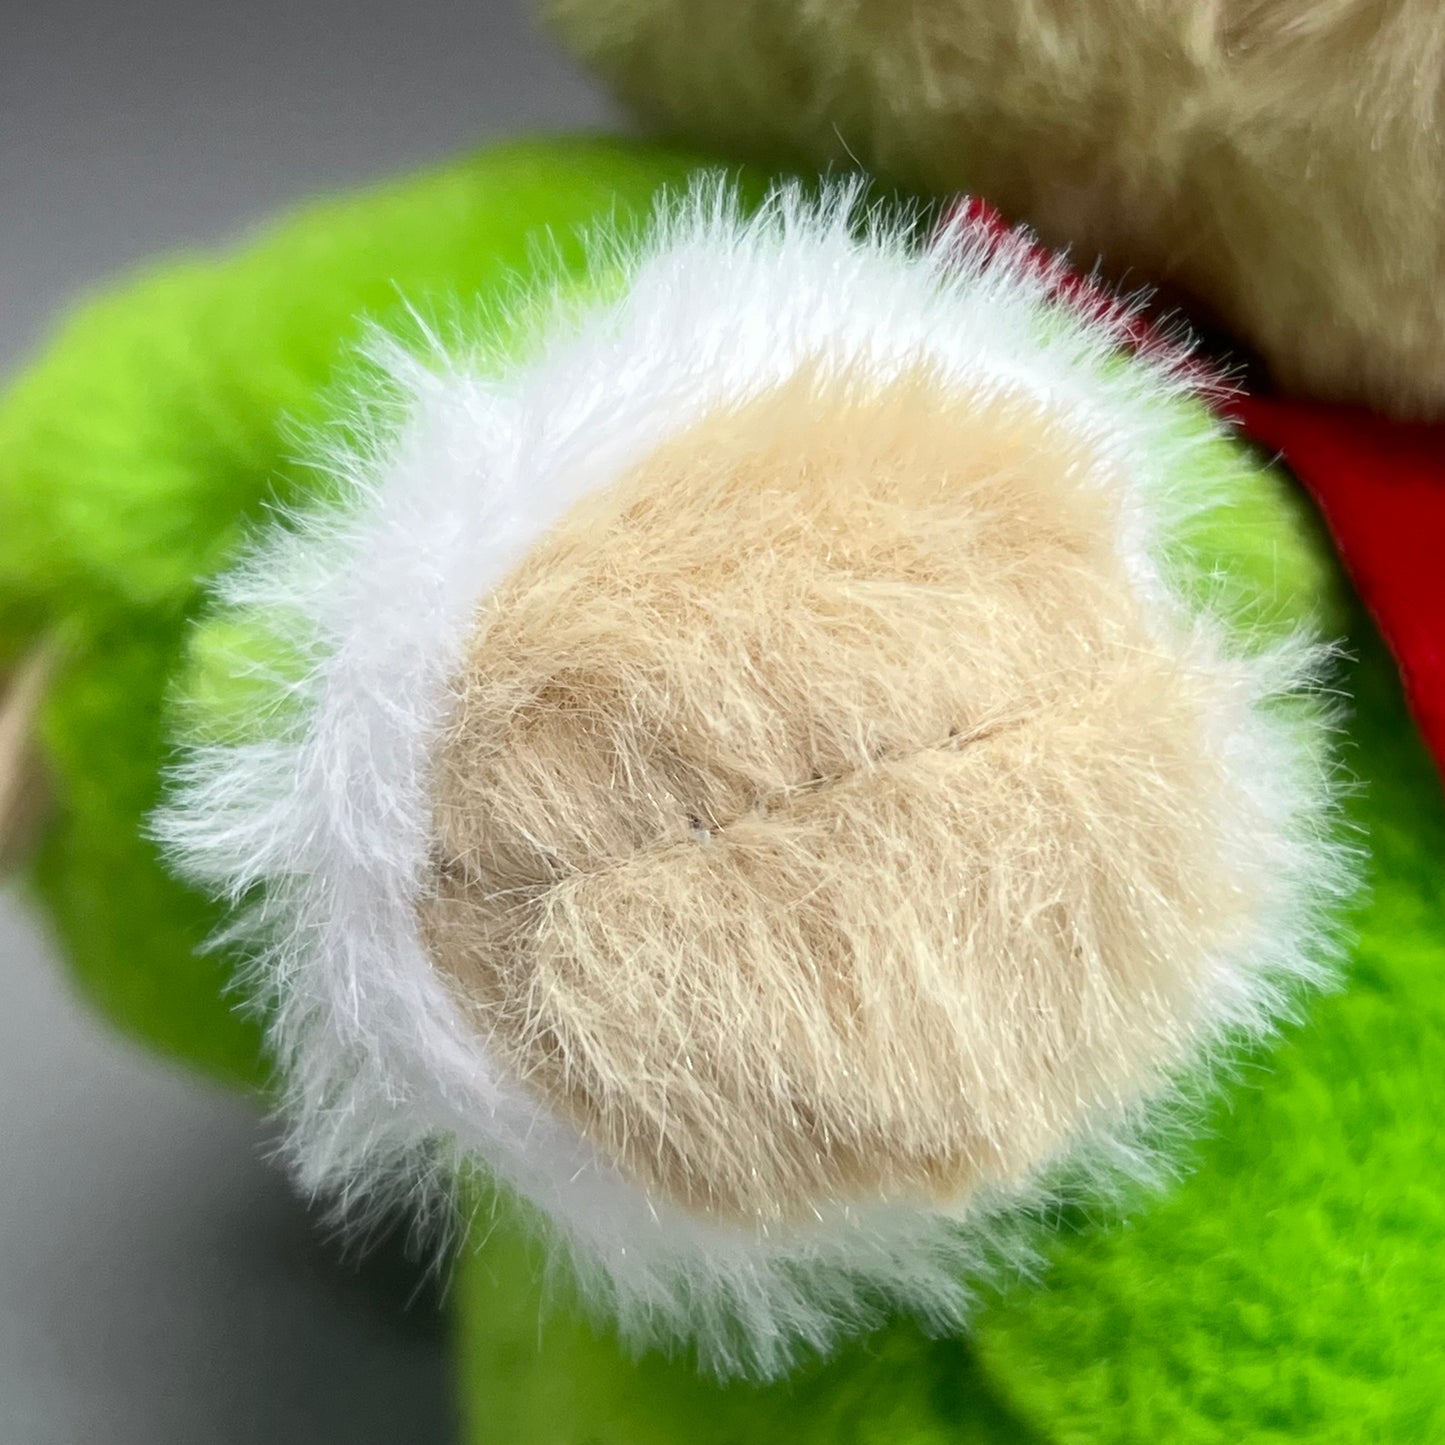 PEEK A BOO TOYS Huggable Teddy Bear Elf Green XMASDIS30